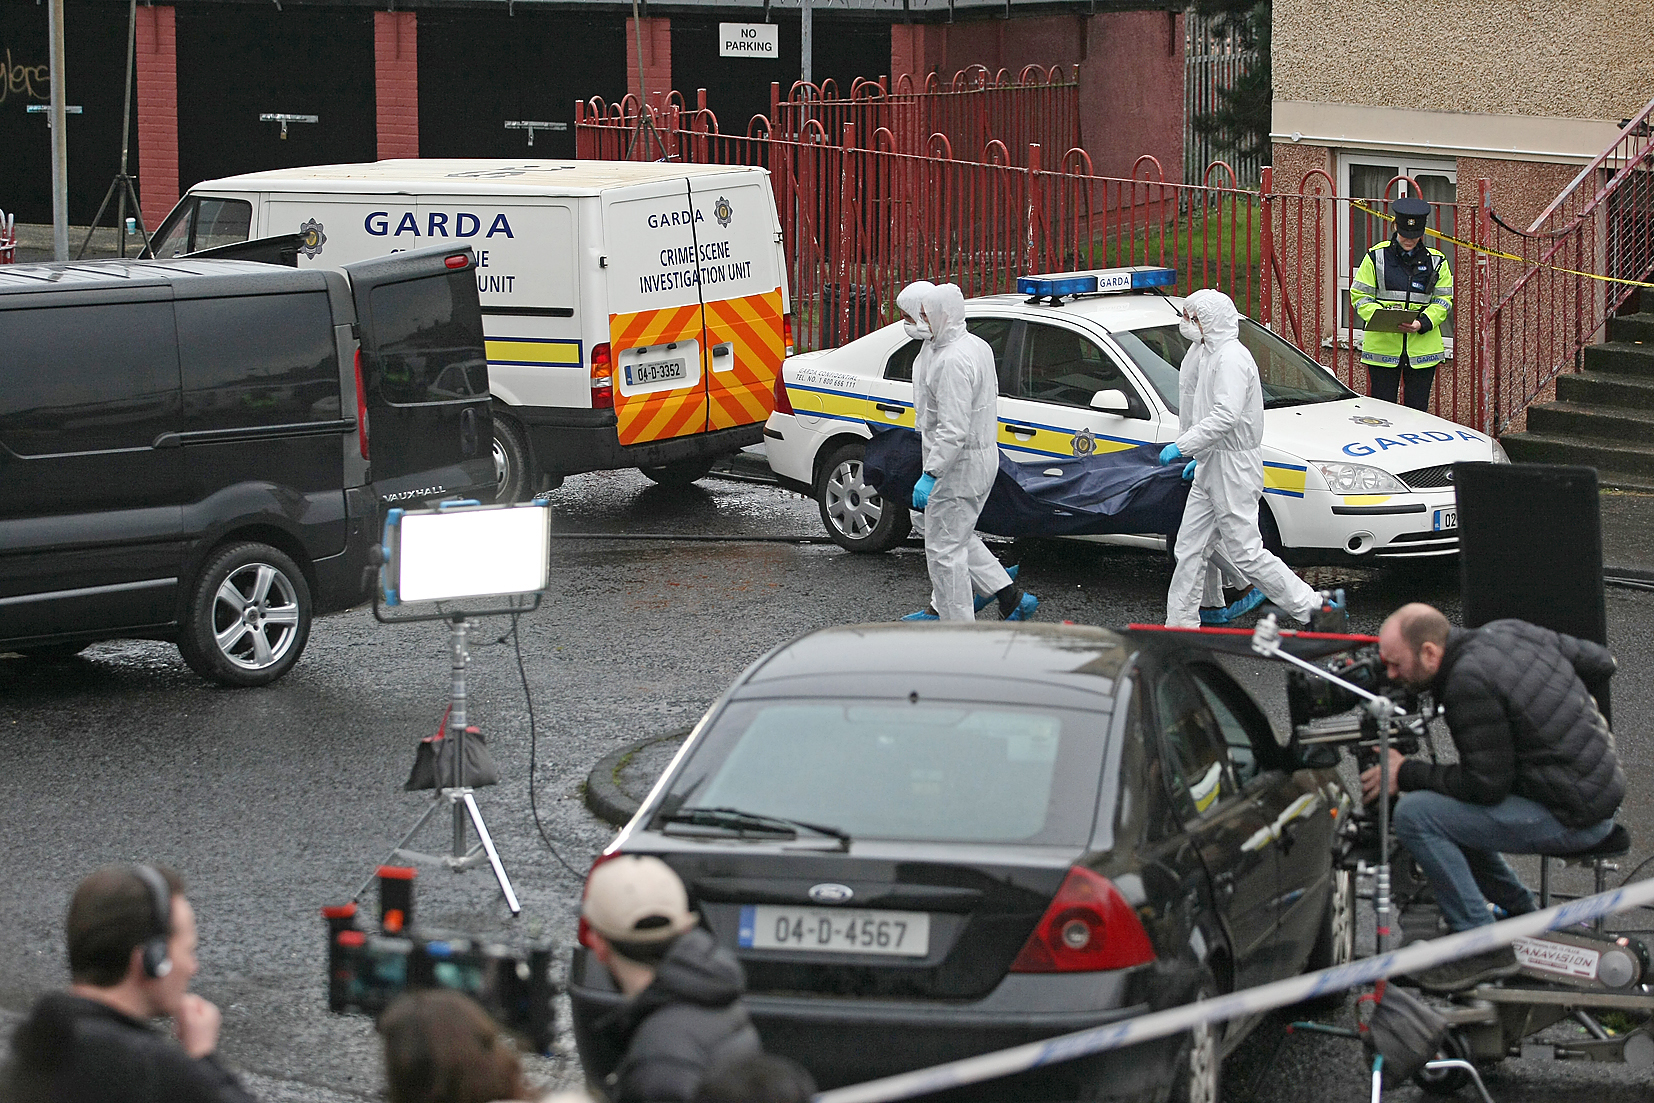 A scene from the true life drama series \'Dublin Murders\' being filmed in Corrib Avenue, Lenadoon